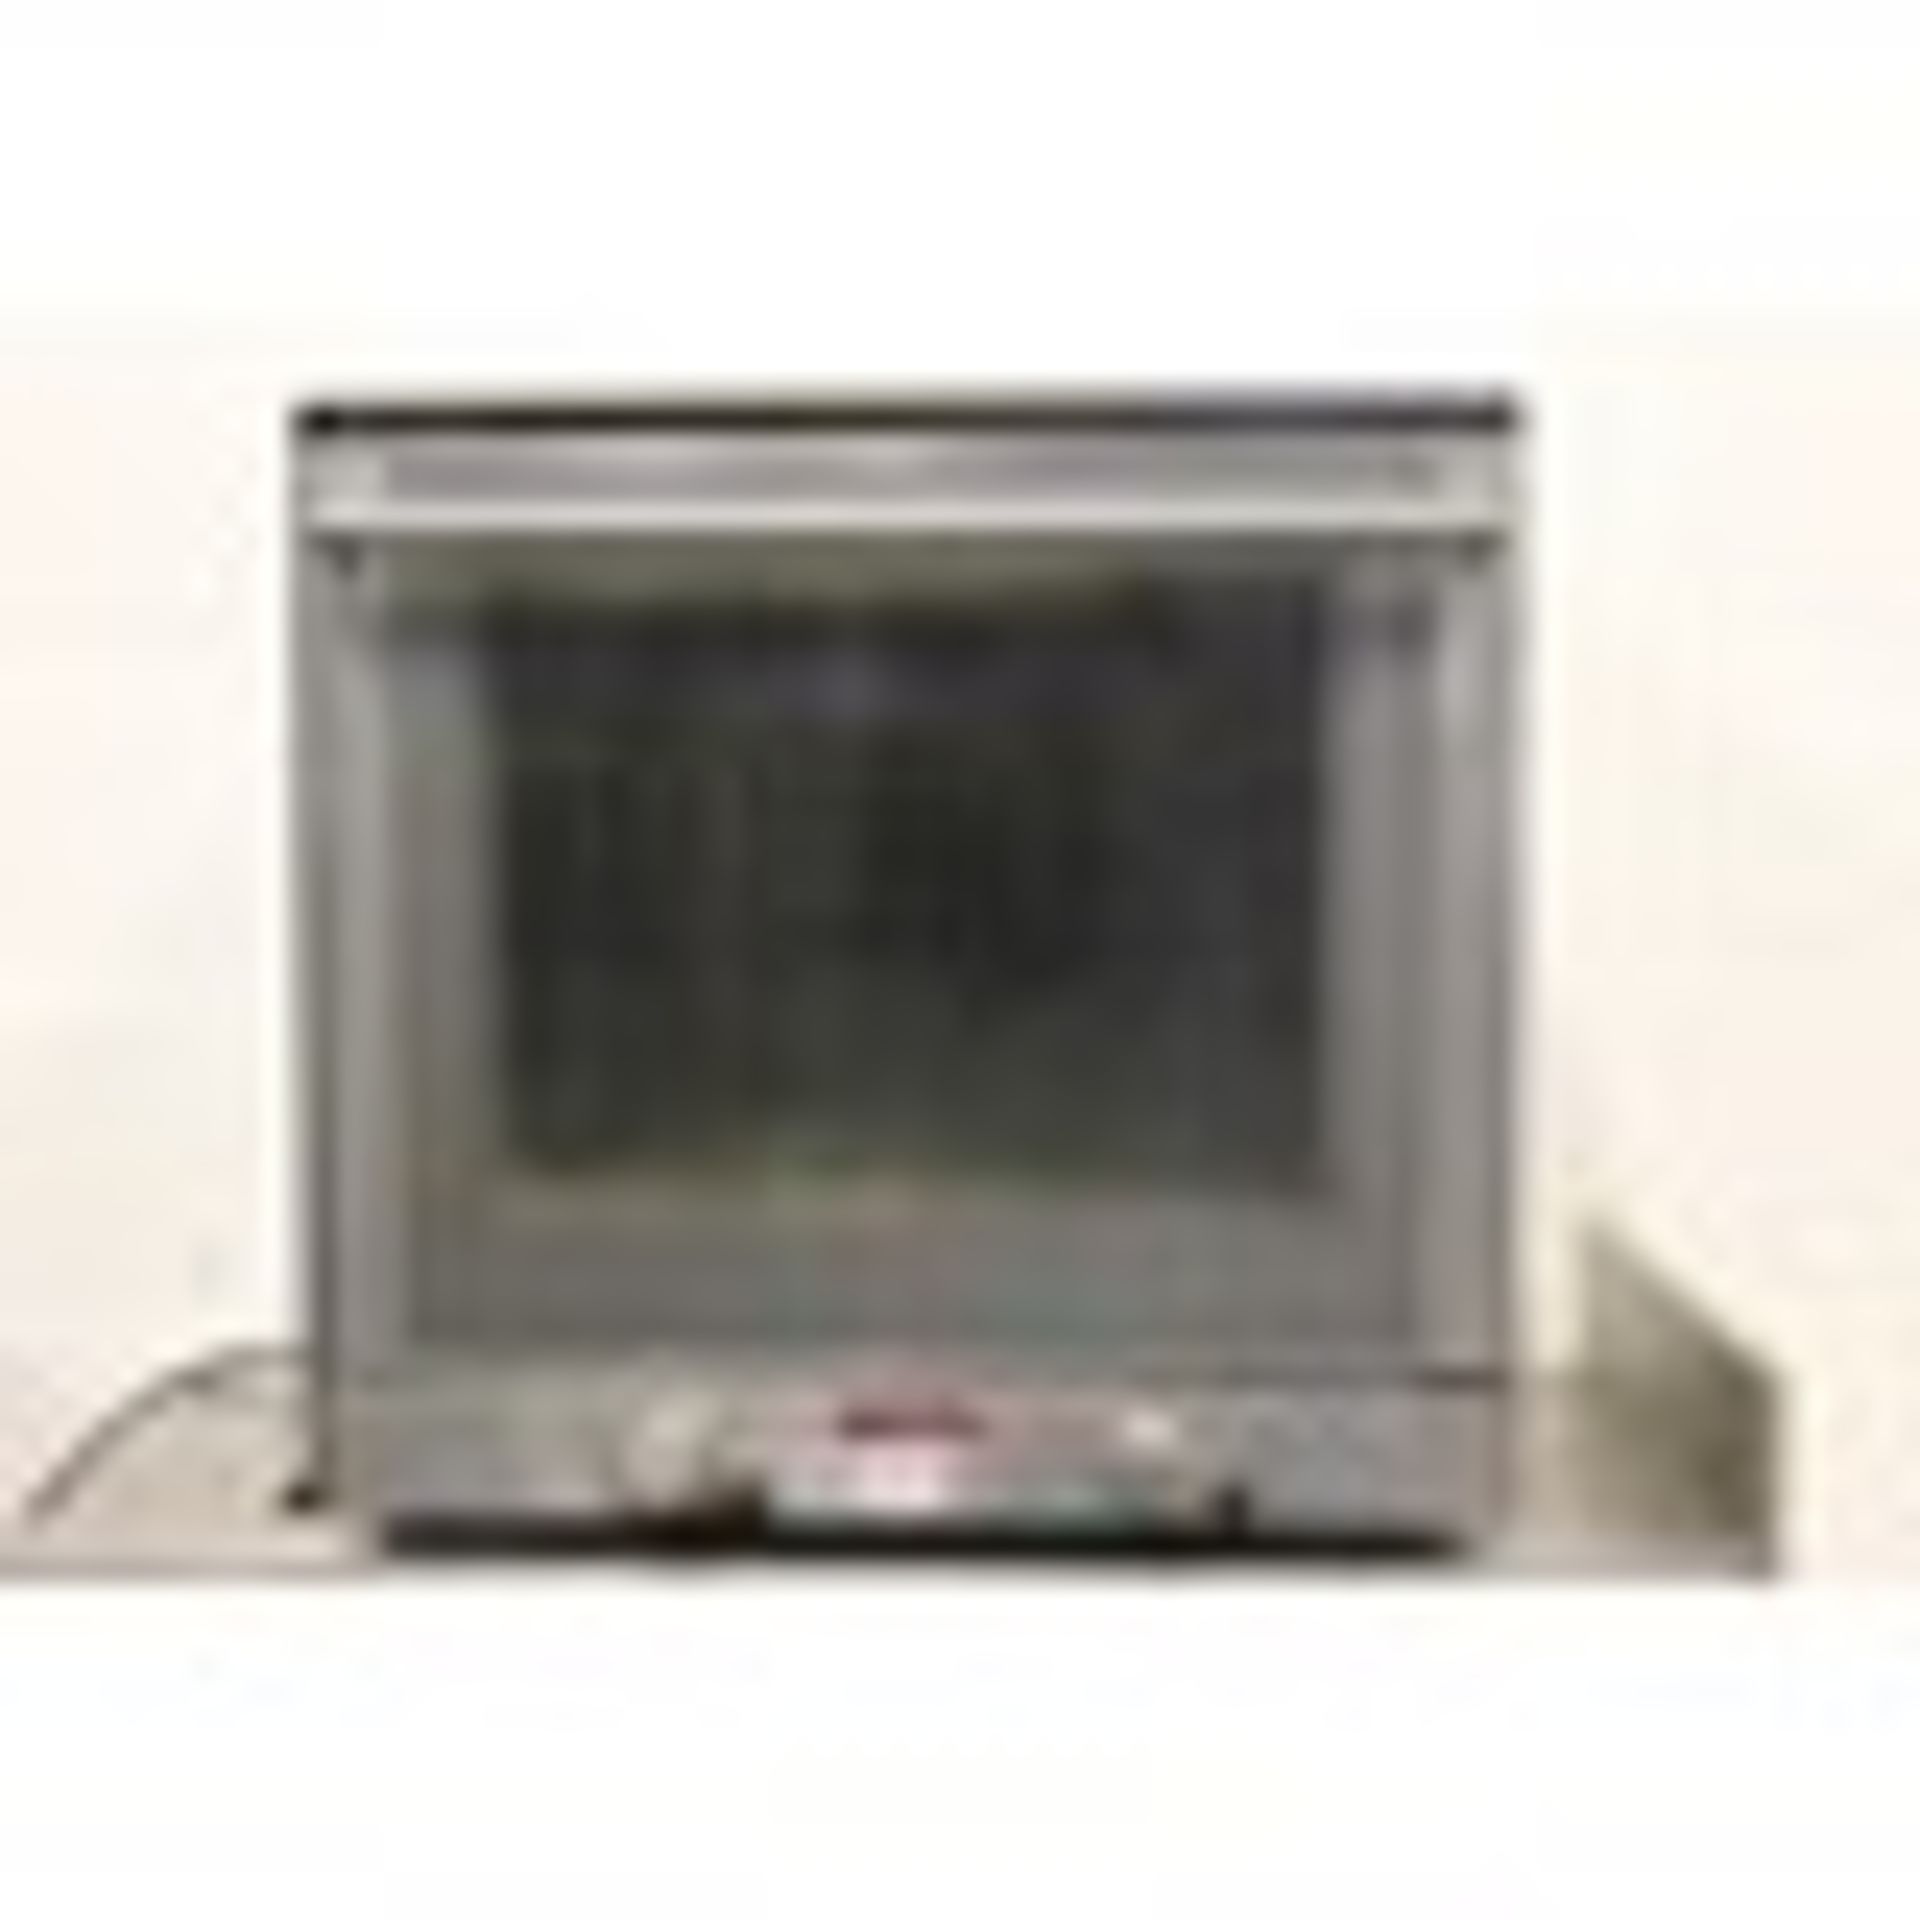 Rowlett Rolland Small Baking Oven – as found -GA43DW – NO VAT